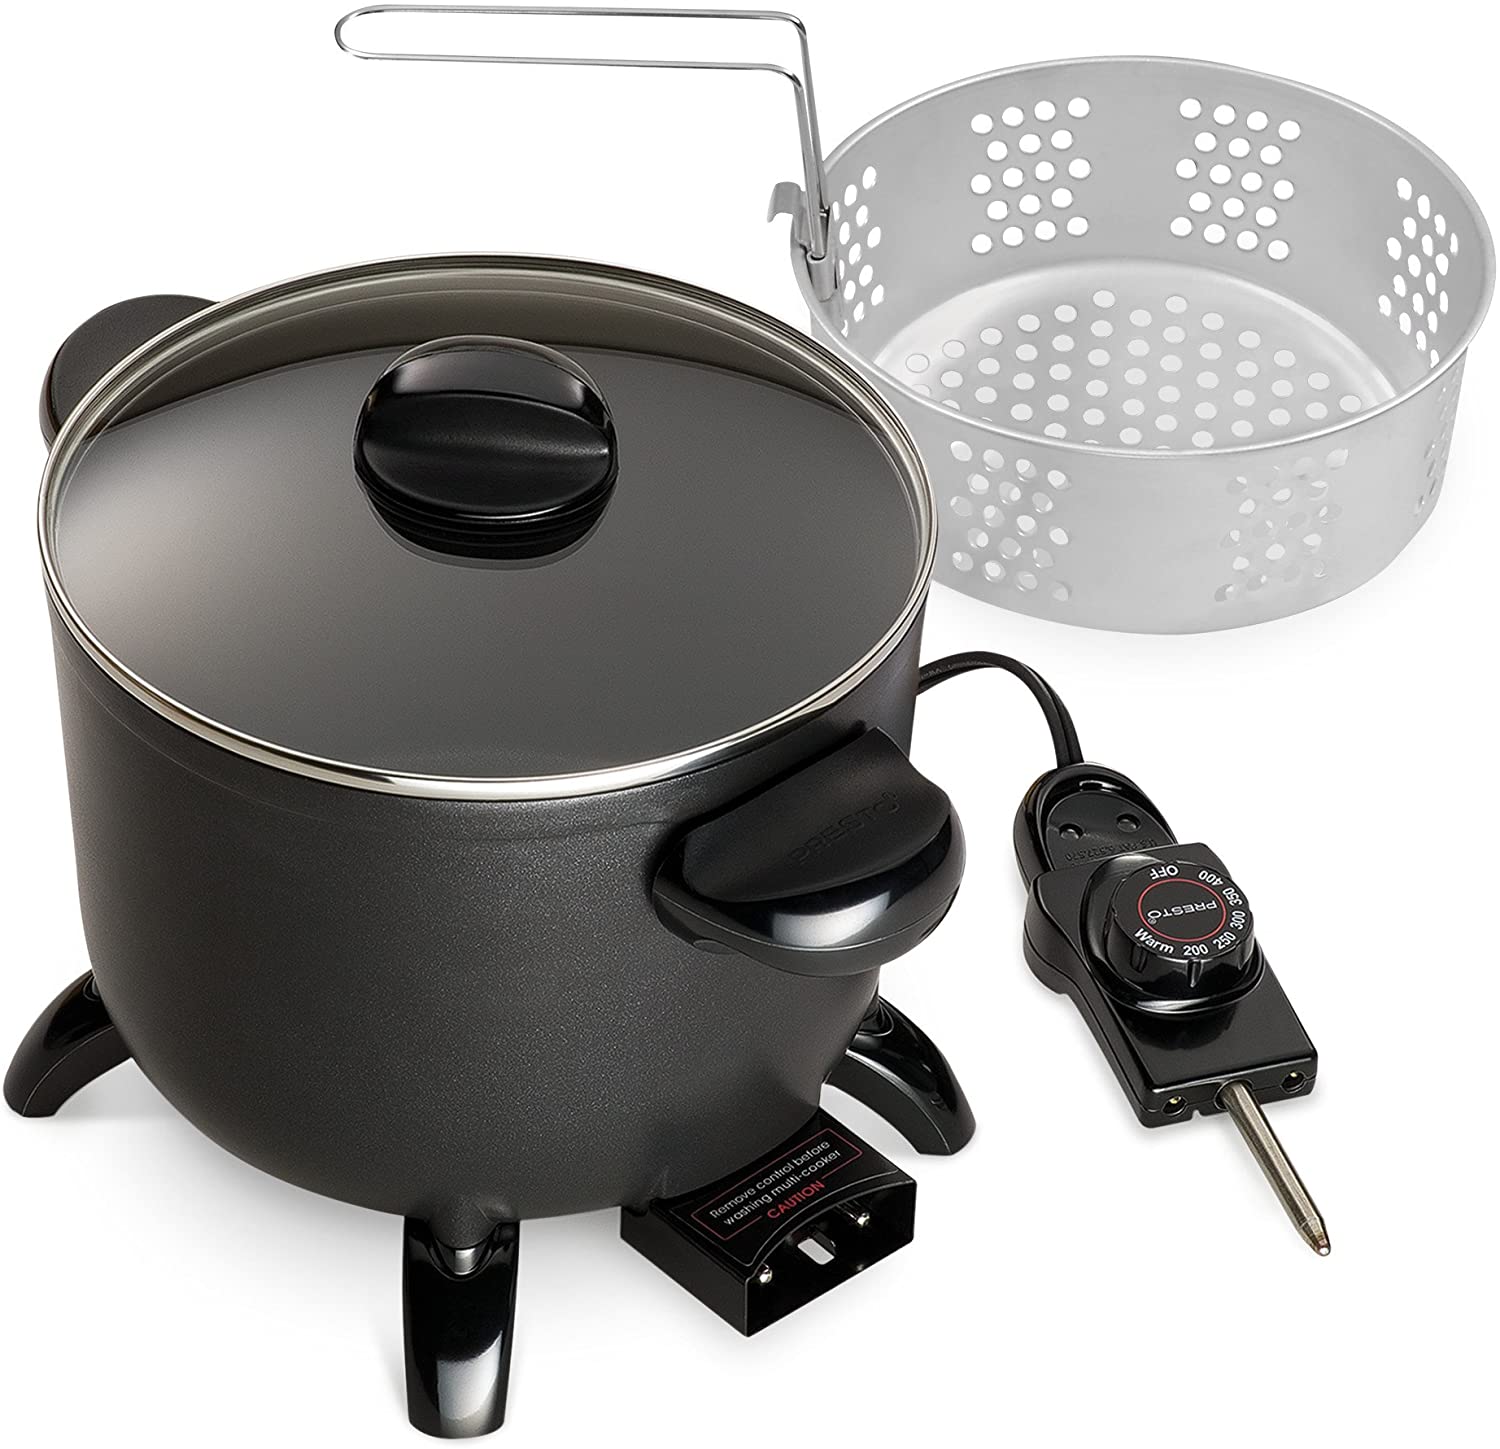 https://www.dontwasteyourmoney.com/wp-content/uploads/2021/05/presto-06006-kitchen-kettle-multi-cooker-multi-cooker.jpg